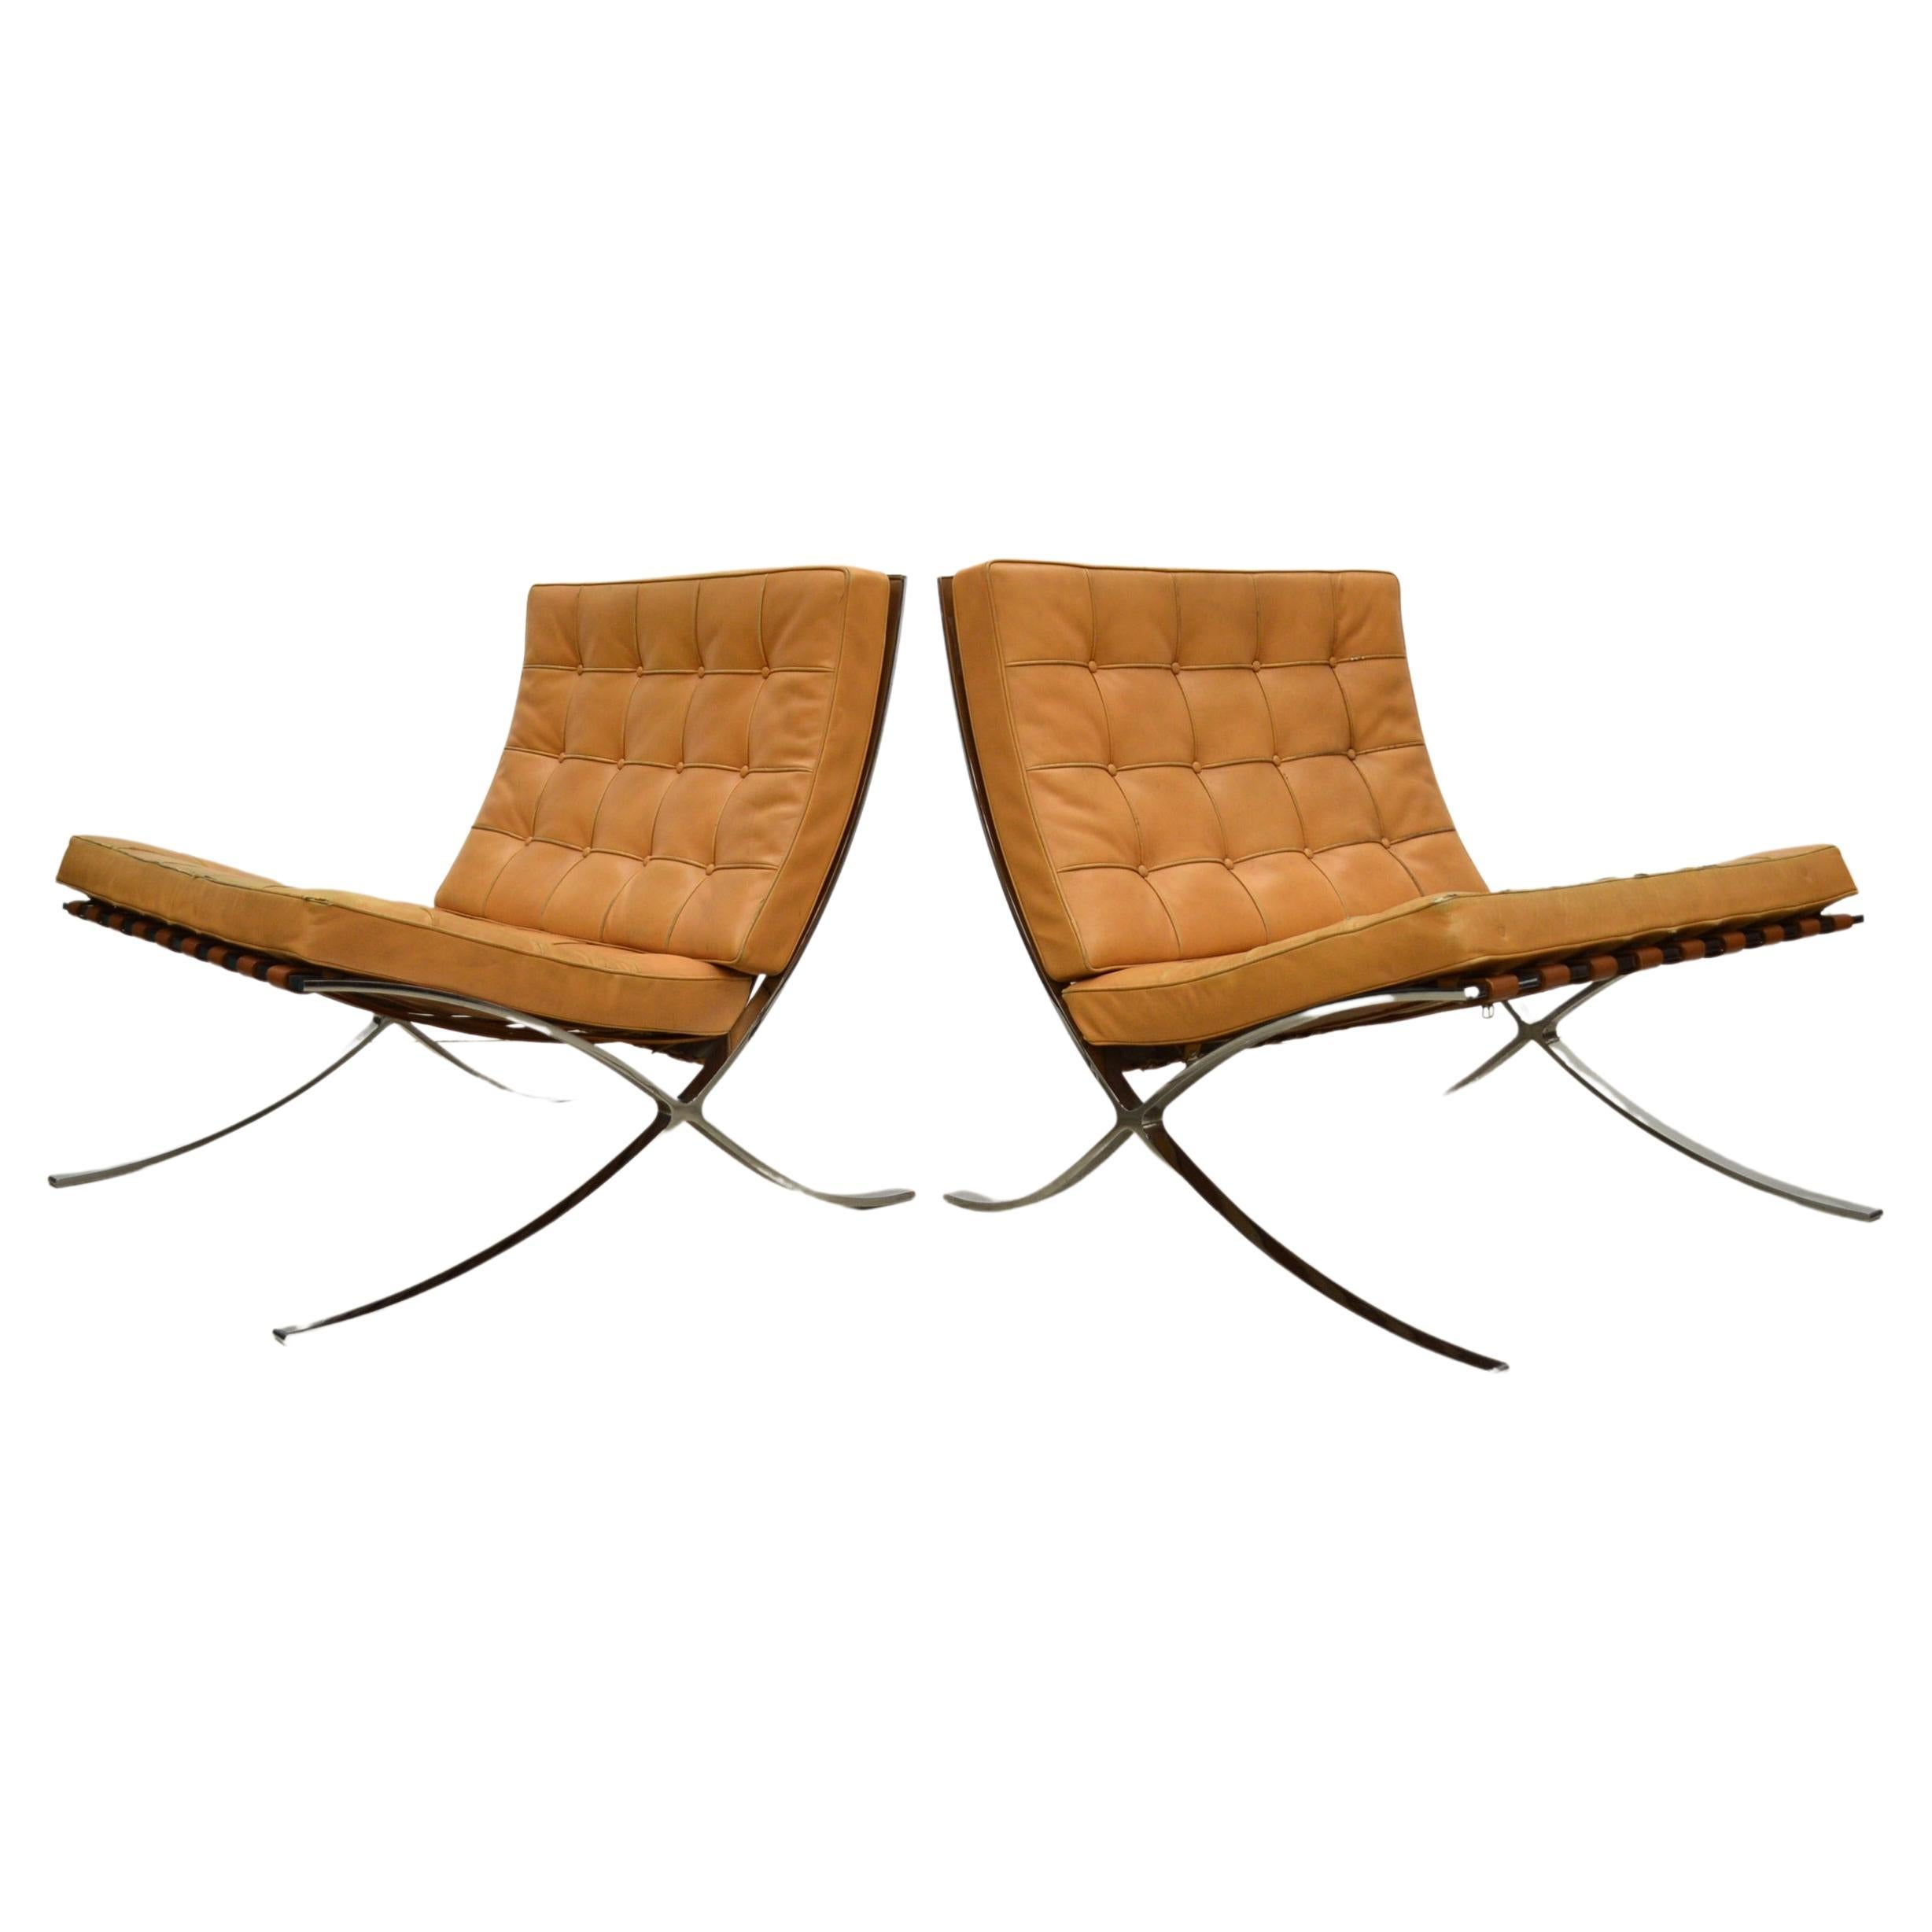 Pair Vintage Cognac Barcelona Chair by Mies van der Rohe Knoll 1970s